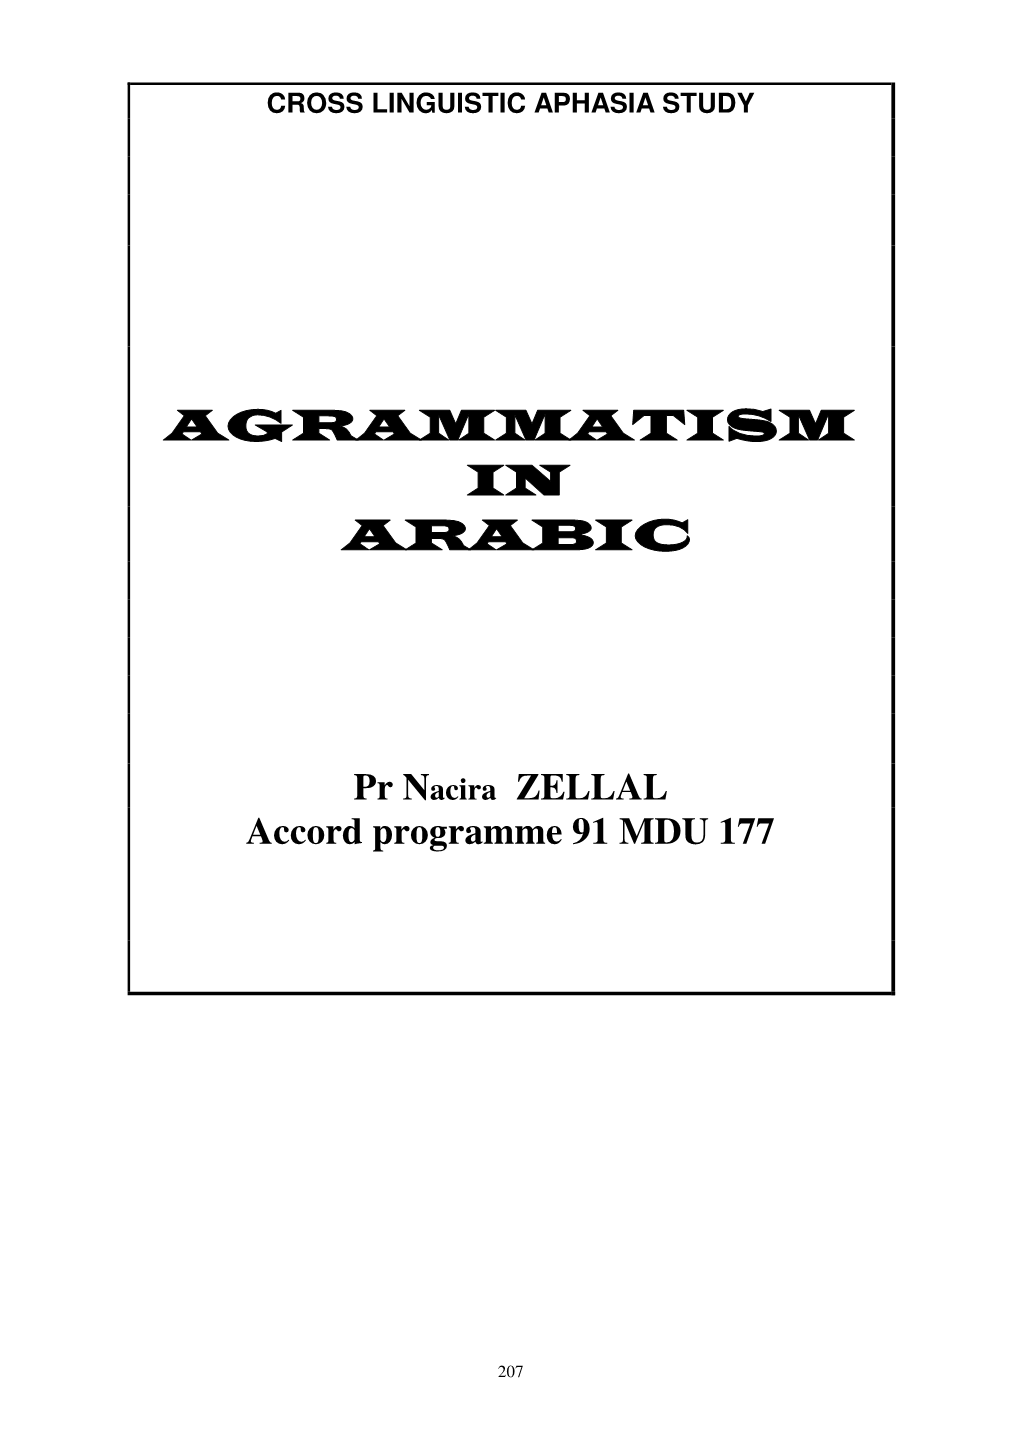 Agrammatism in Arabic